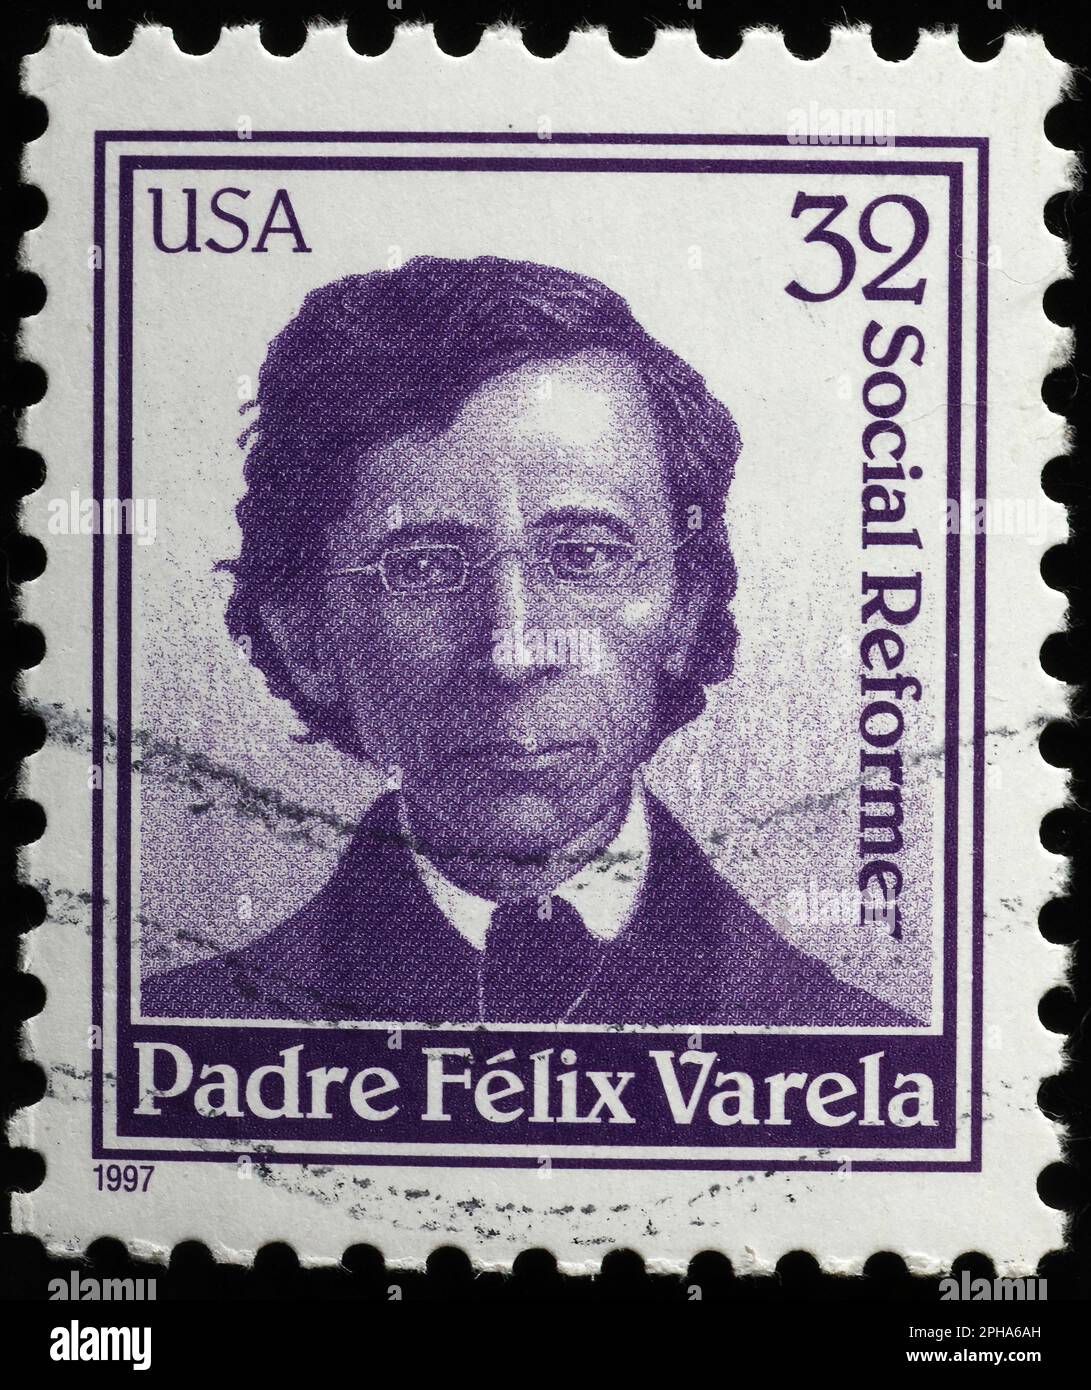 Padre Felix Varela on american postage stamp Stock Photo